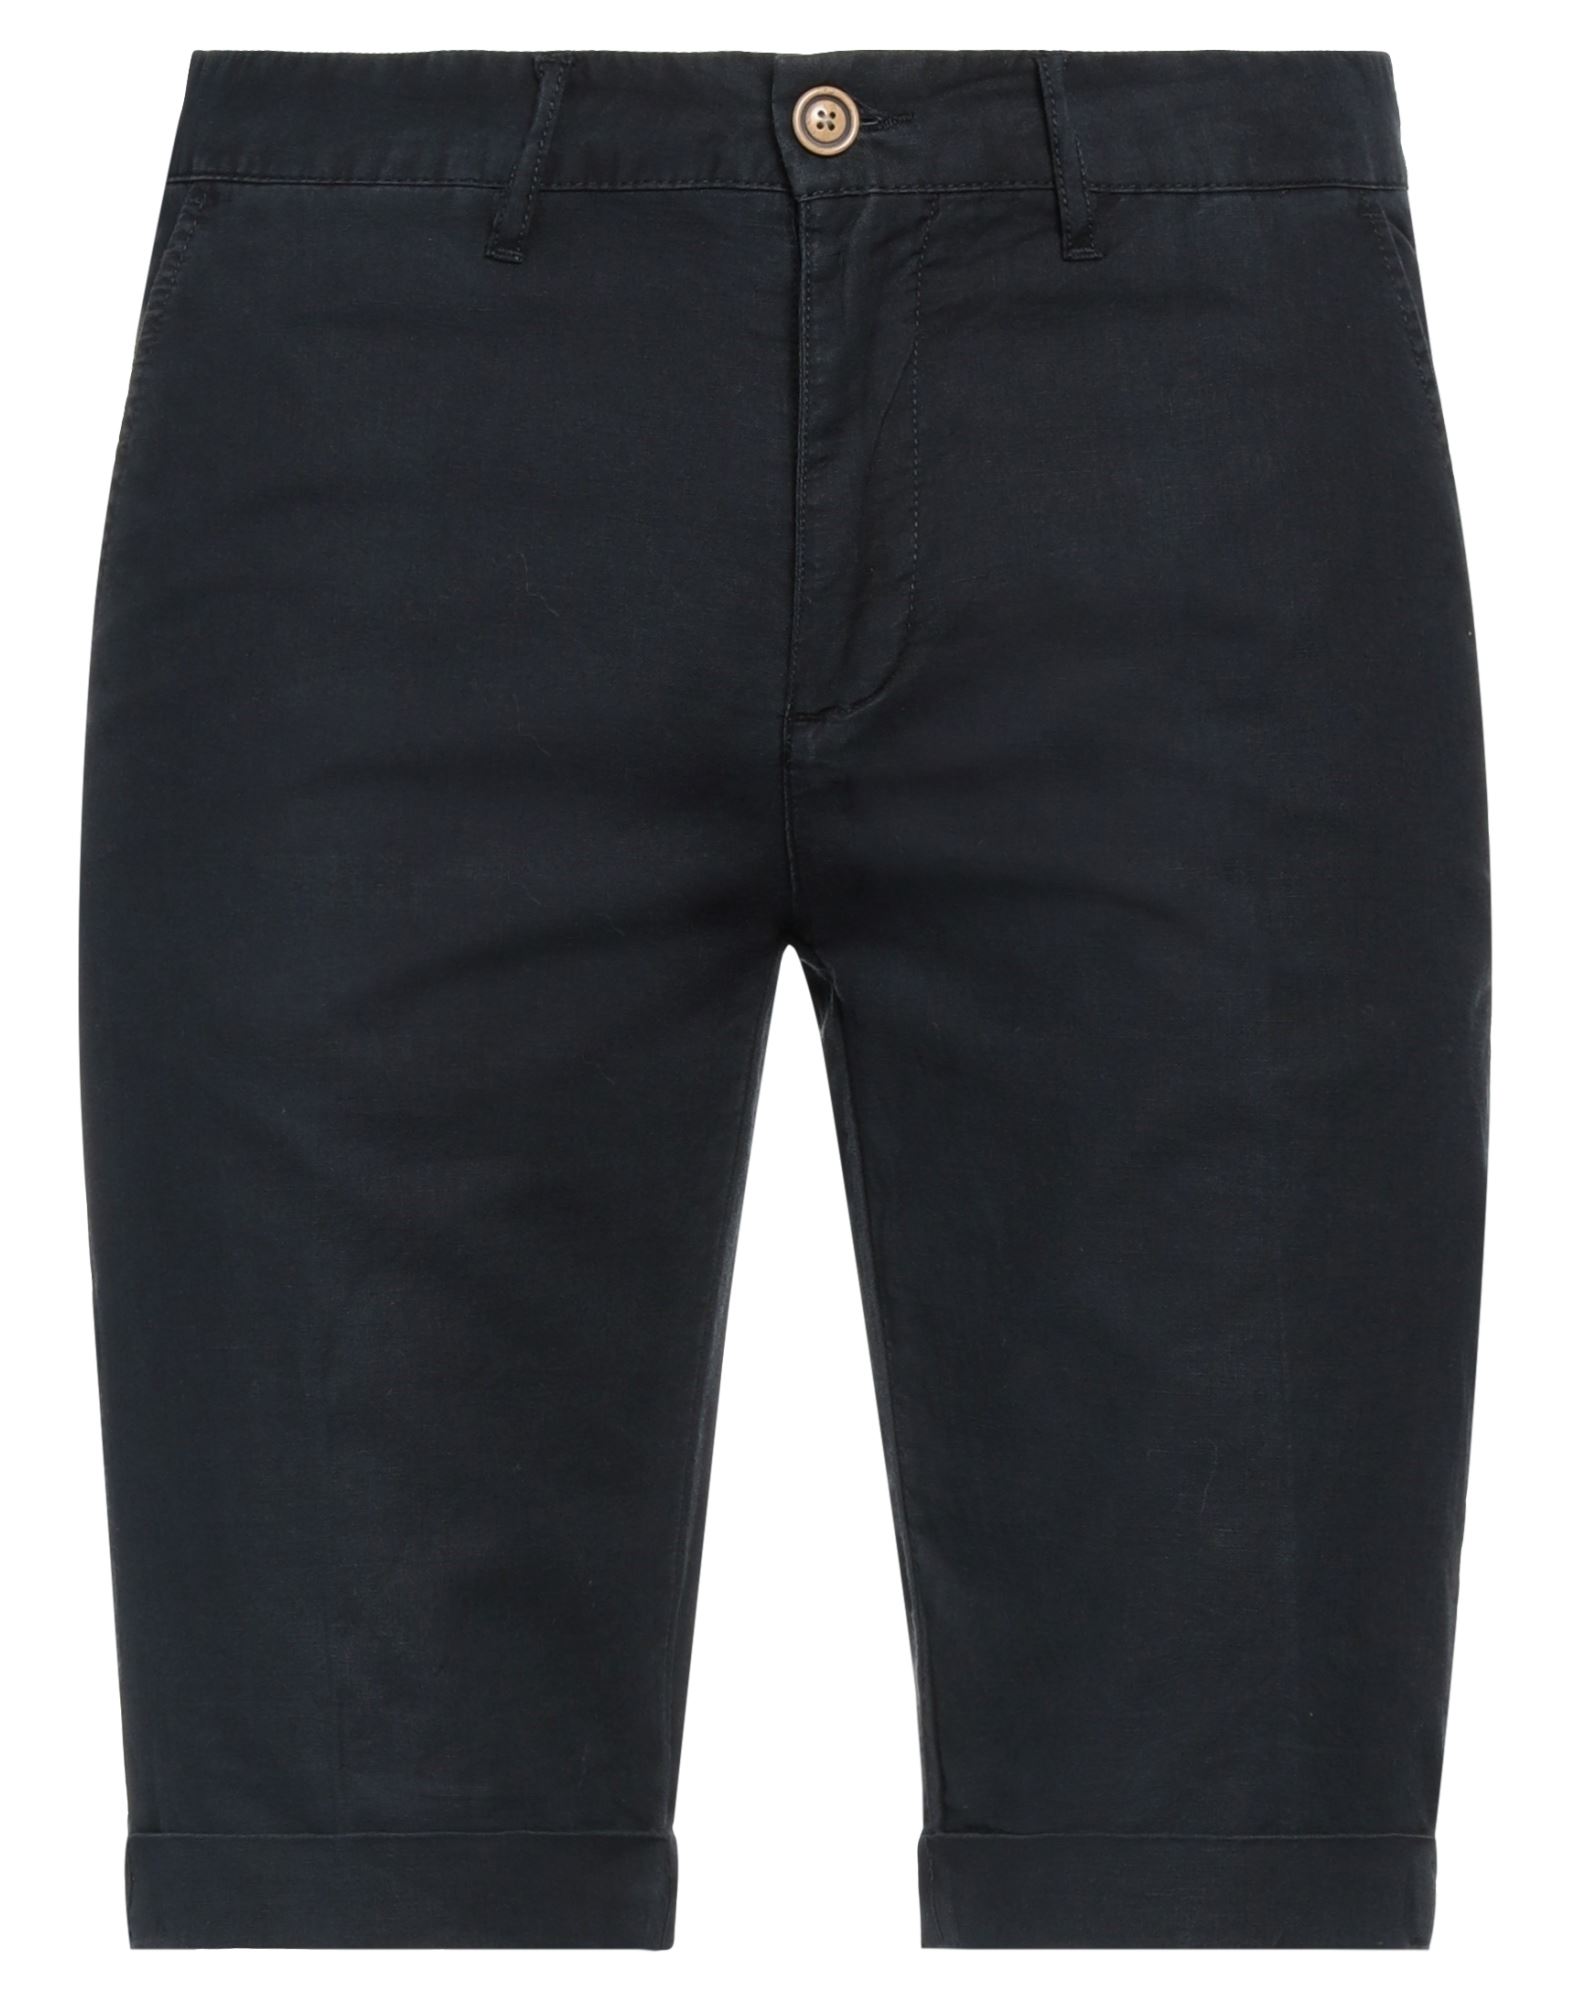 Markup Man Shorts & Bermuda Shorts Midnight Blue Size 28 Linen, Cotton